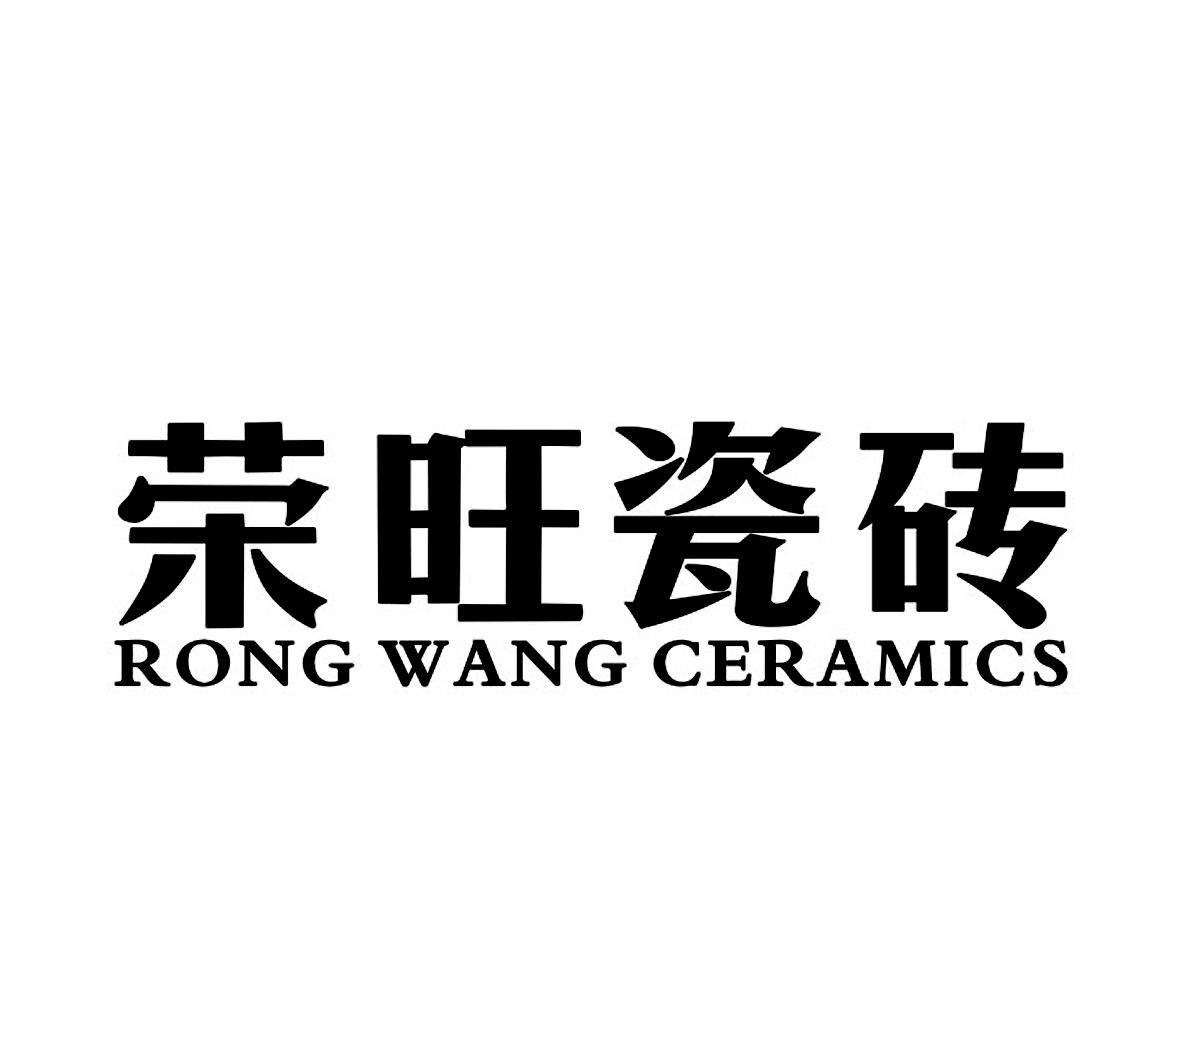 荣旺瓷砖 rong wang ceramics商标公告